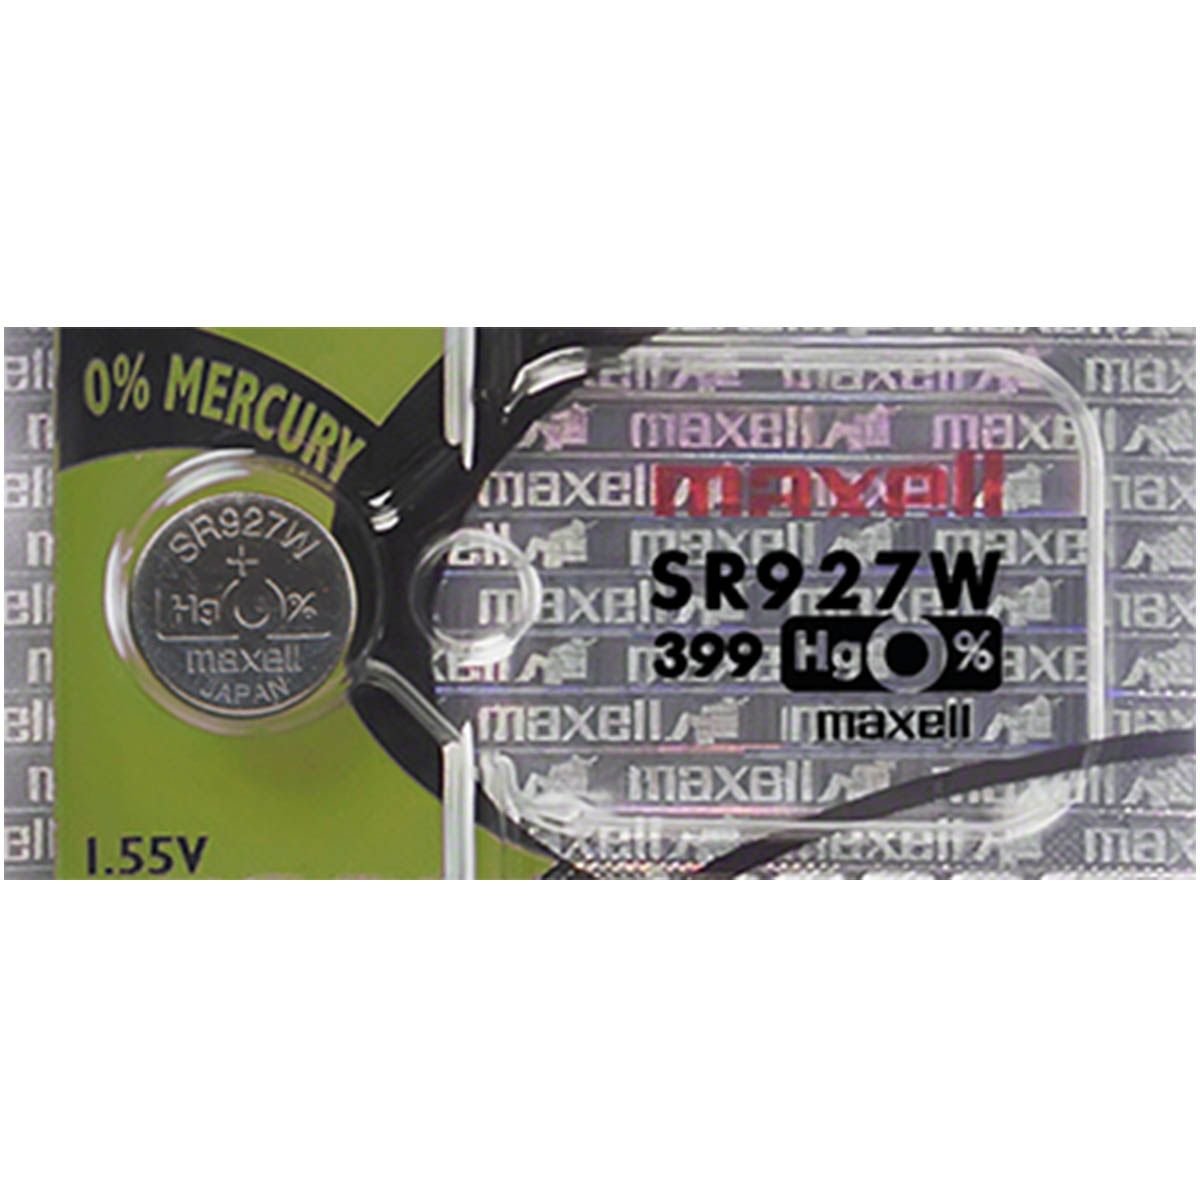 Maxell 399 Watch Battery (SR927W) Silver Oxide 1.55V